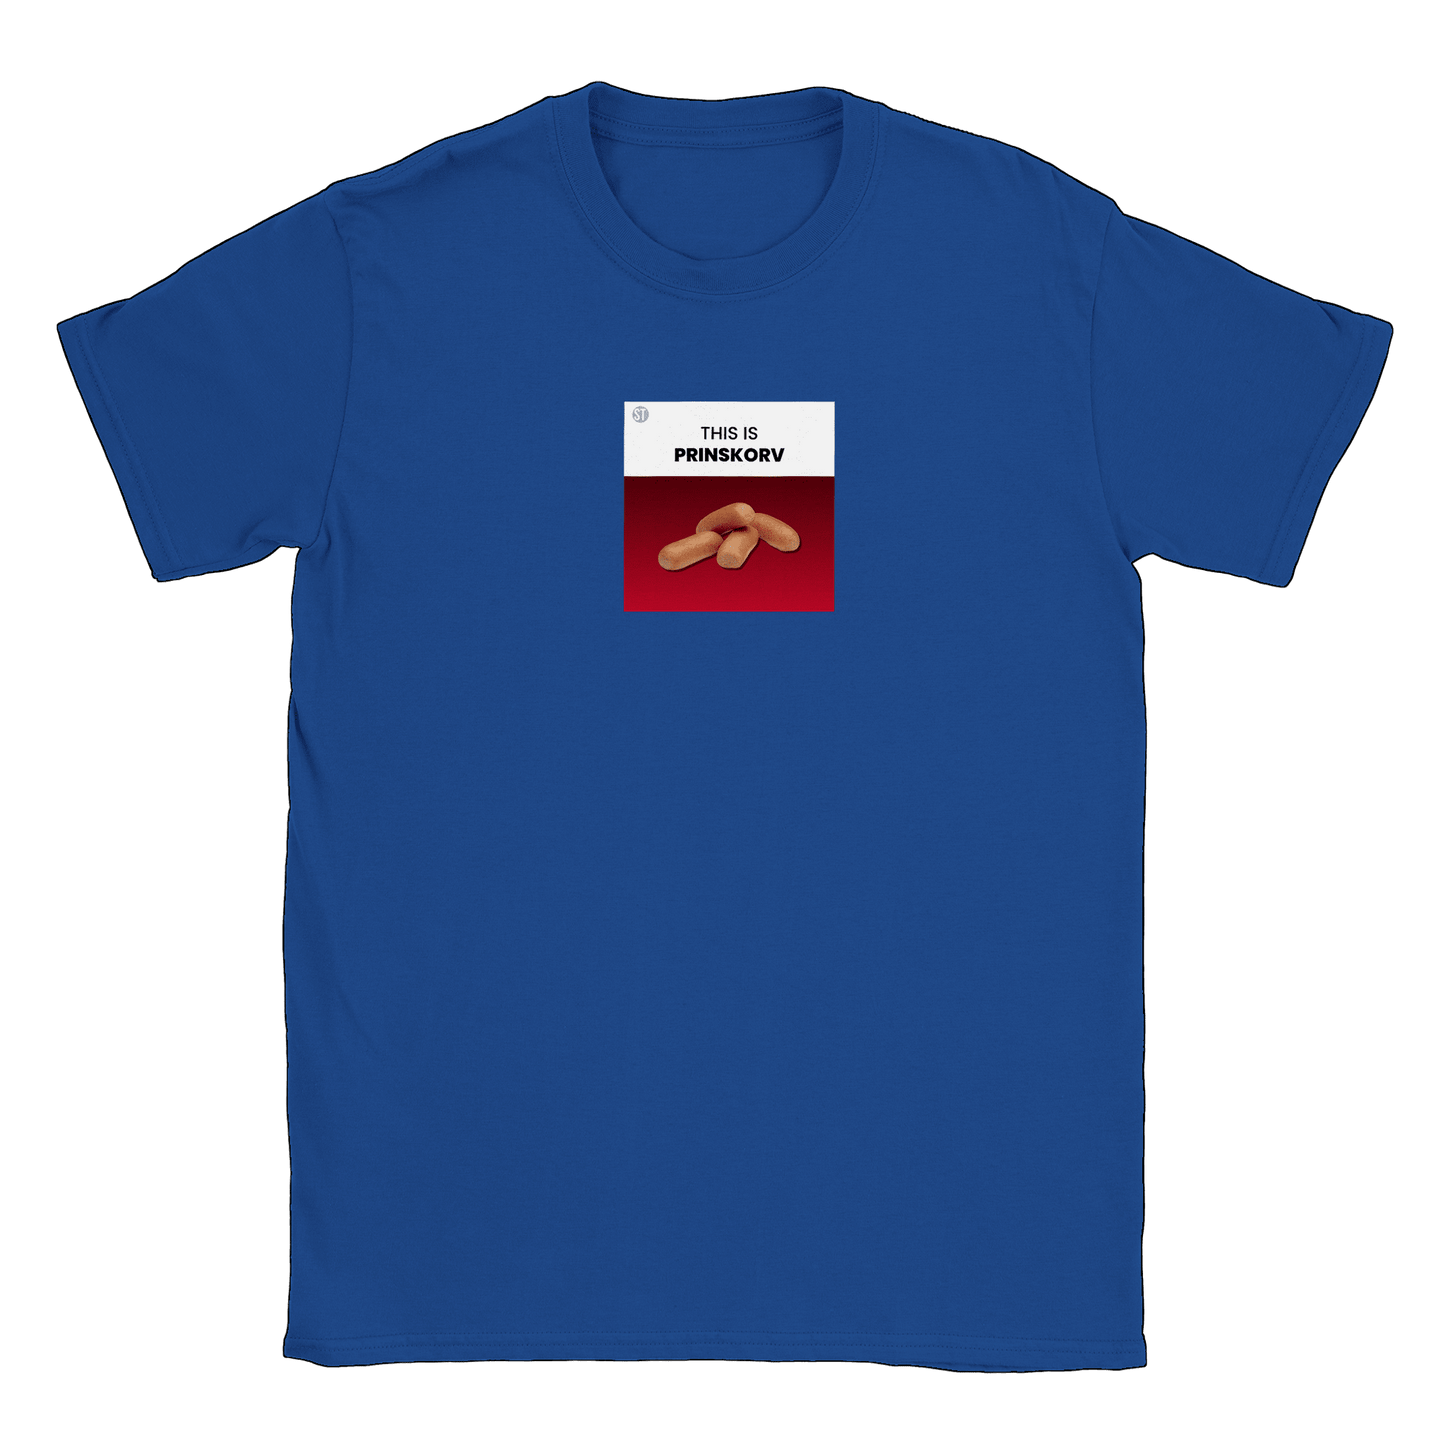 This is Prinskorv - T-shirt Royal